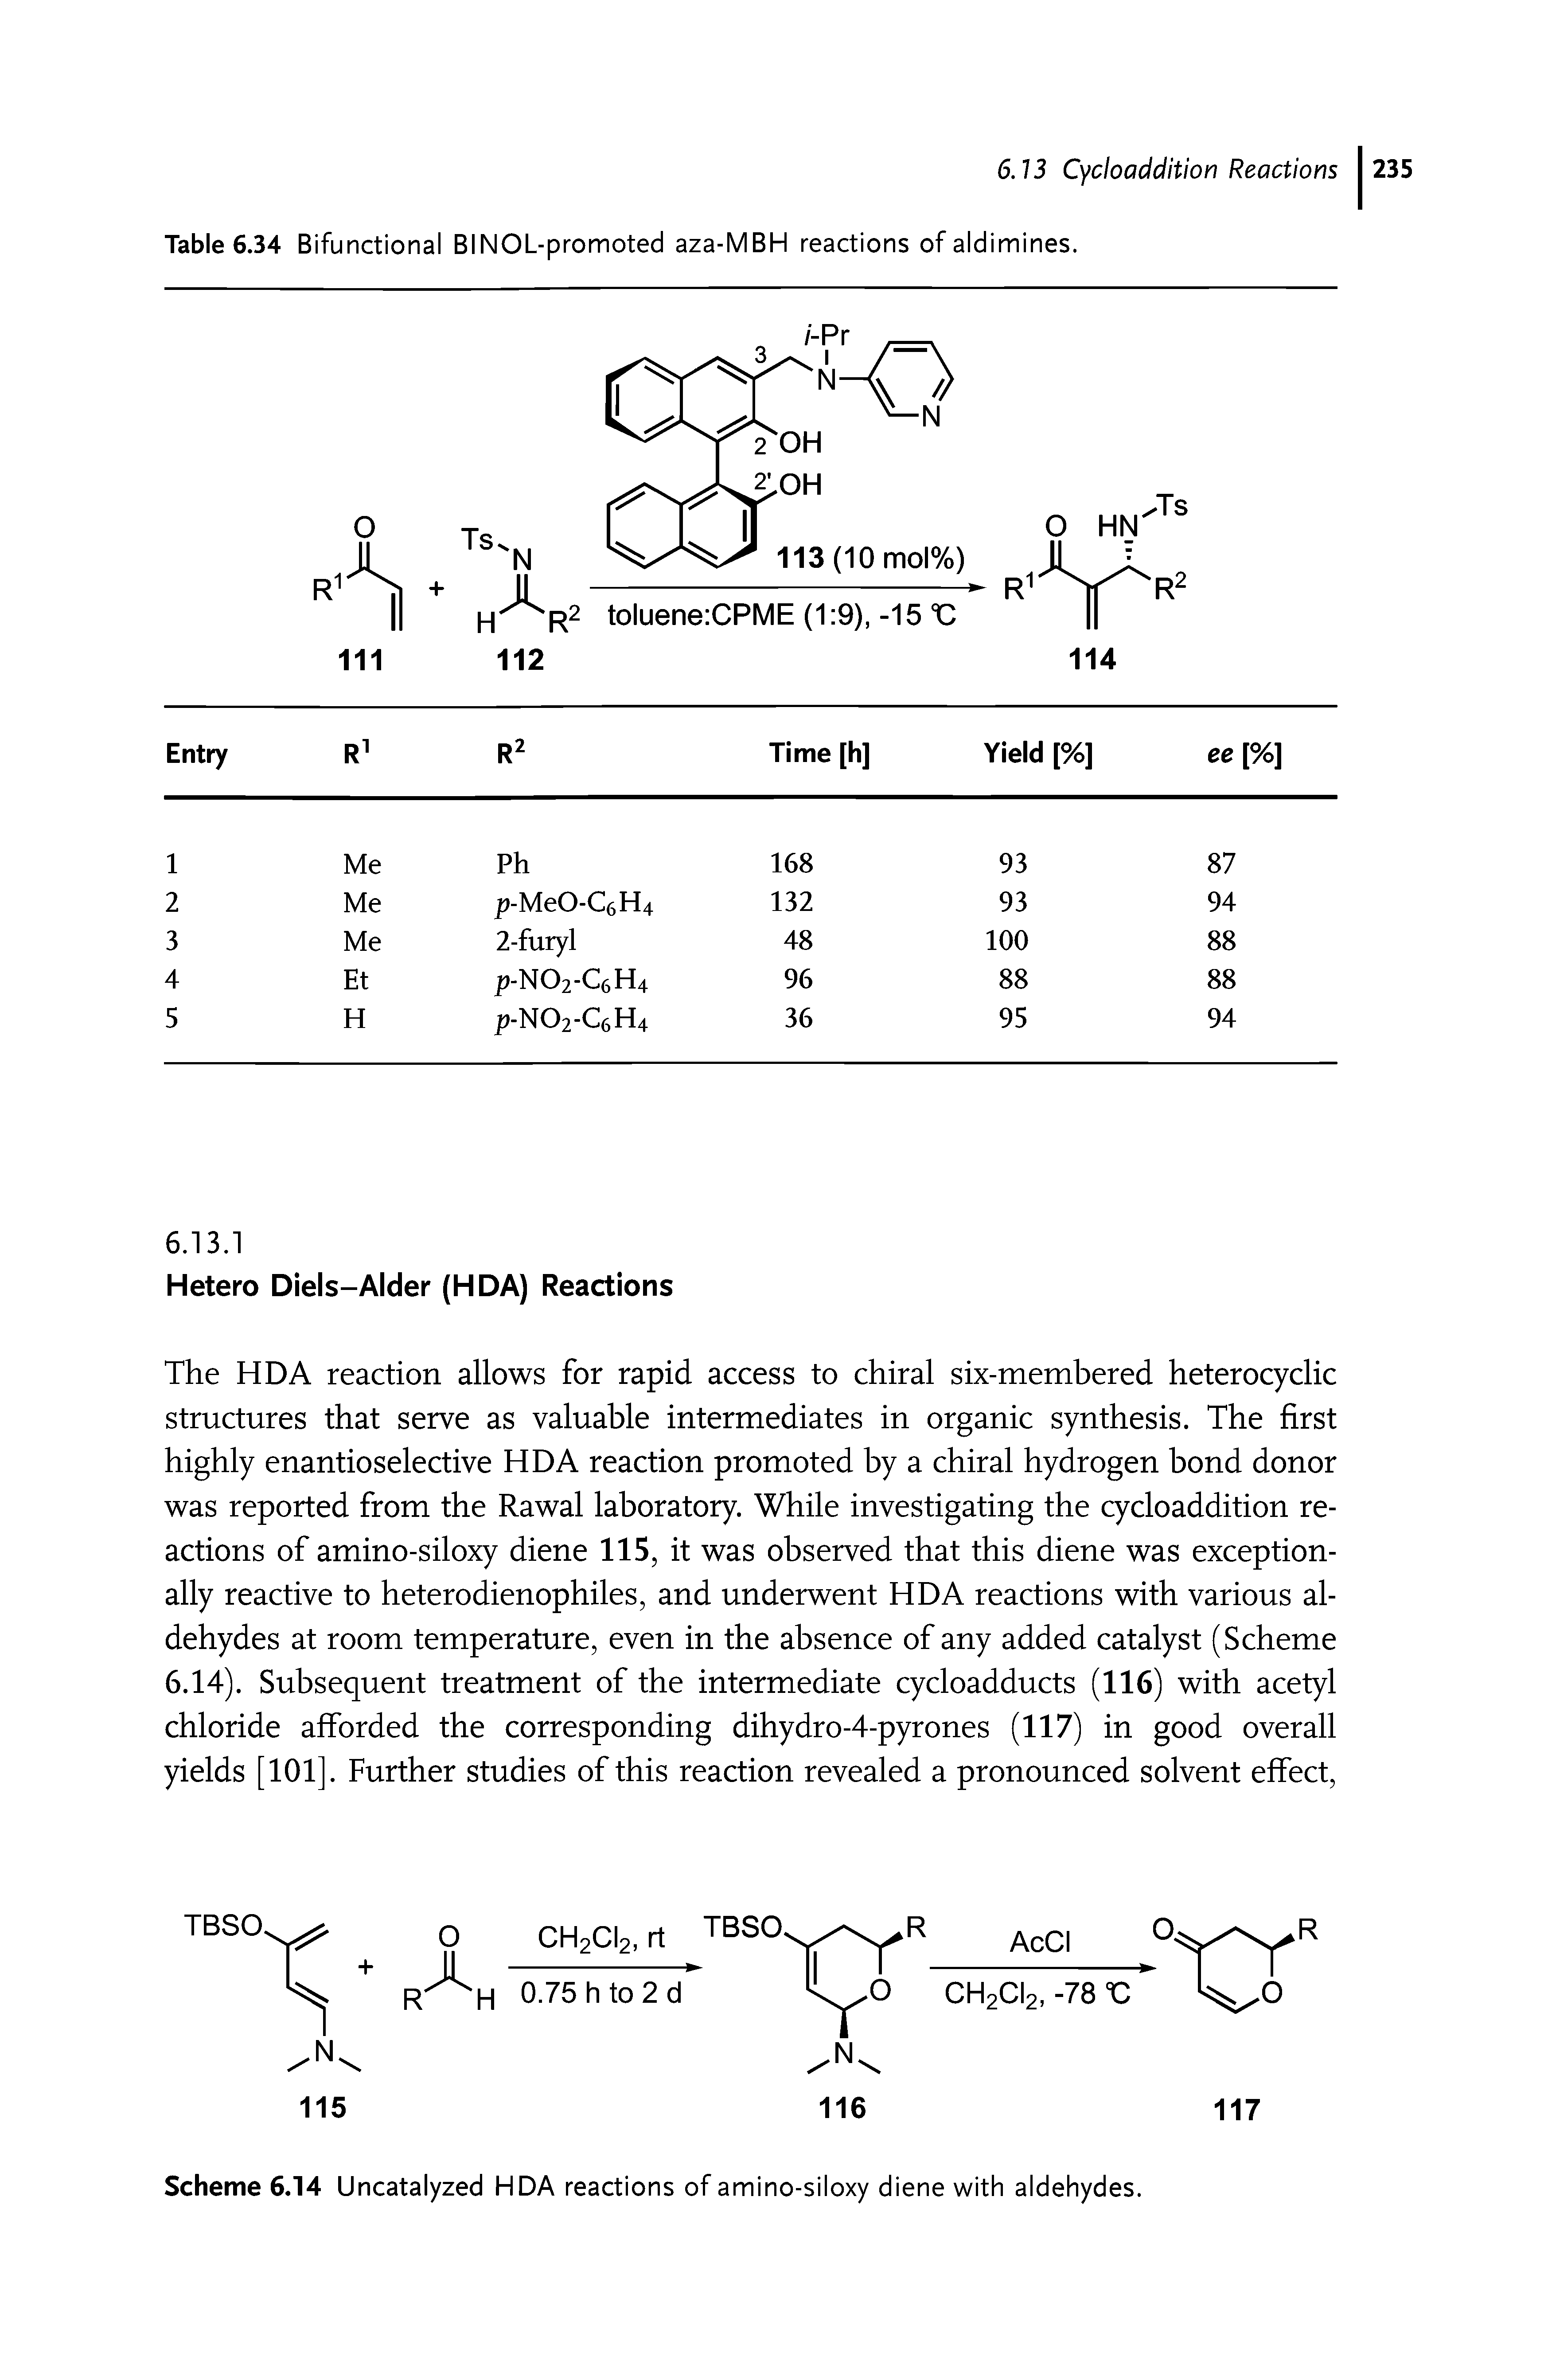 Table 6.34 Bifunctional BINOL-promoted aza-MBH reactions of aldimines.